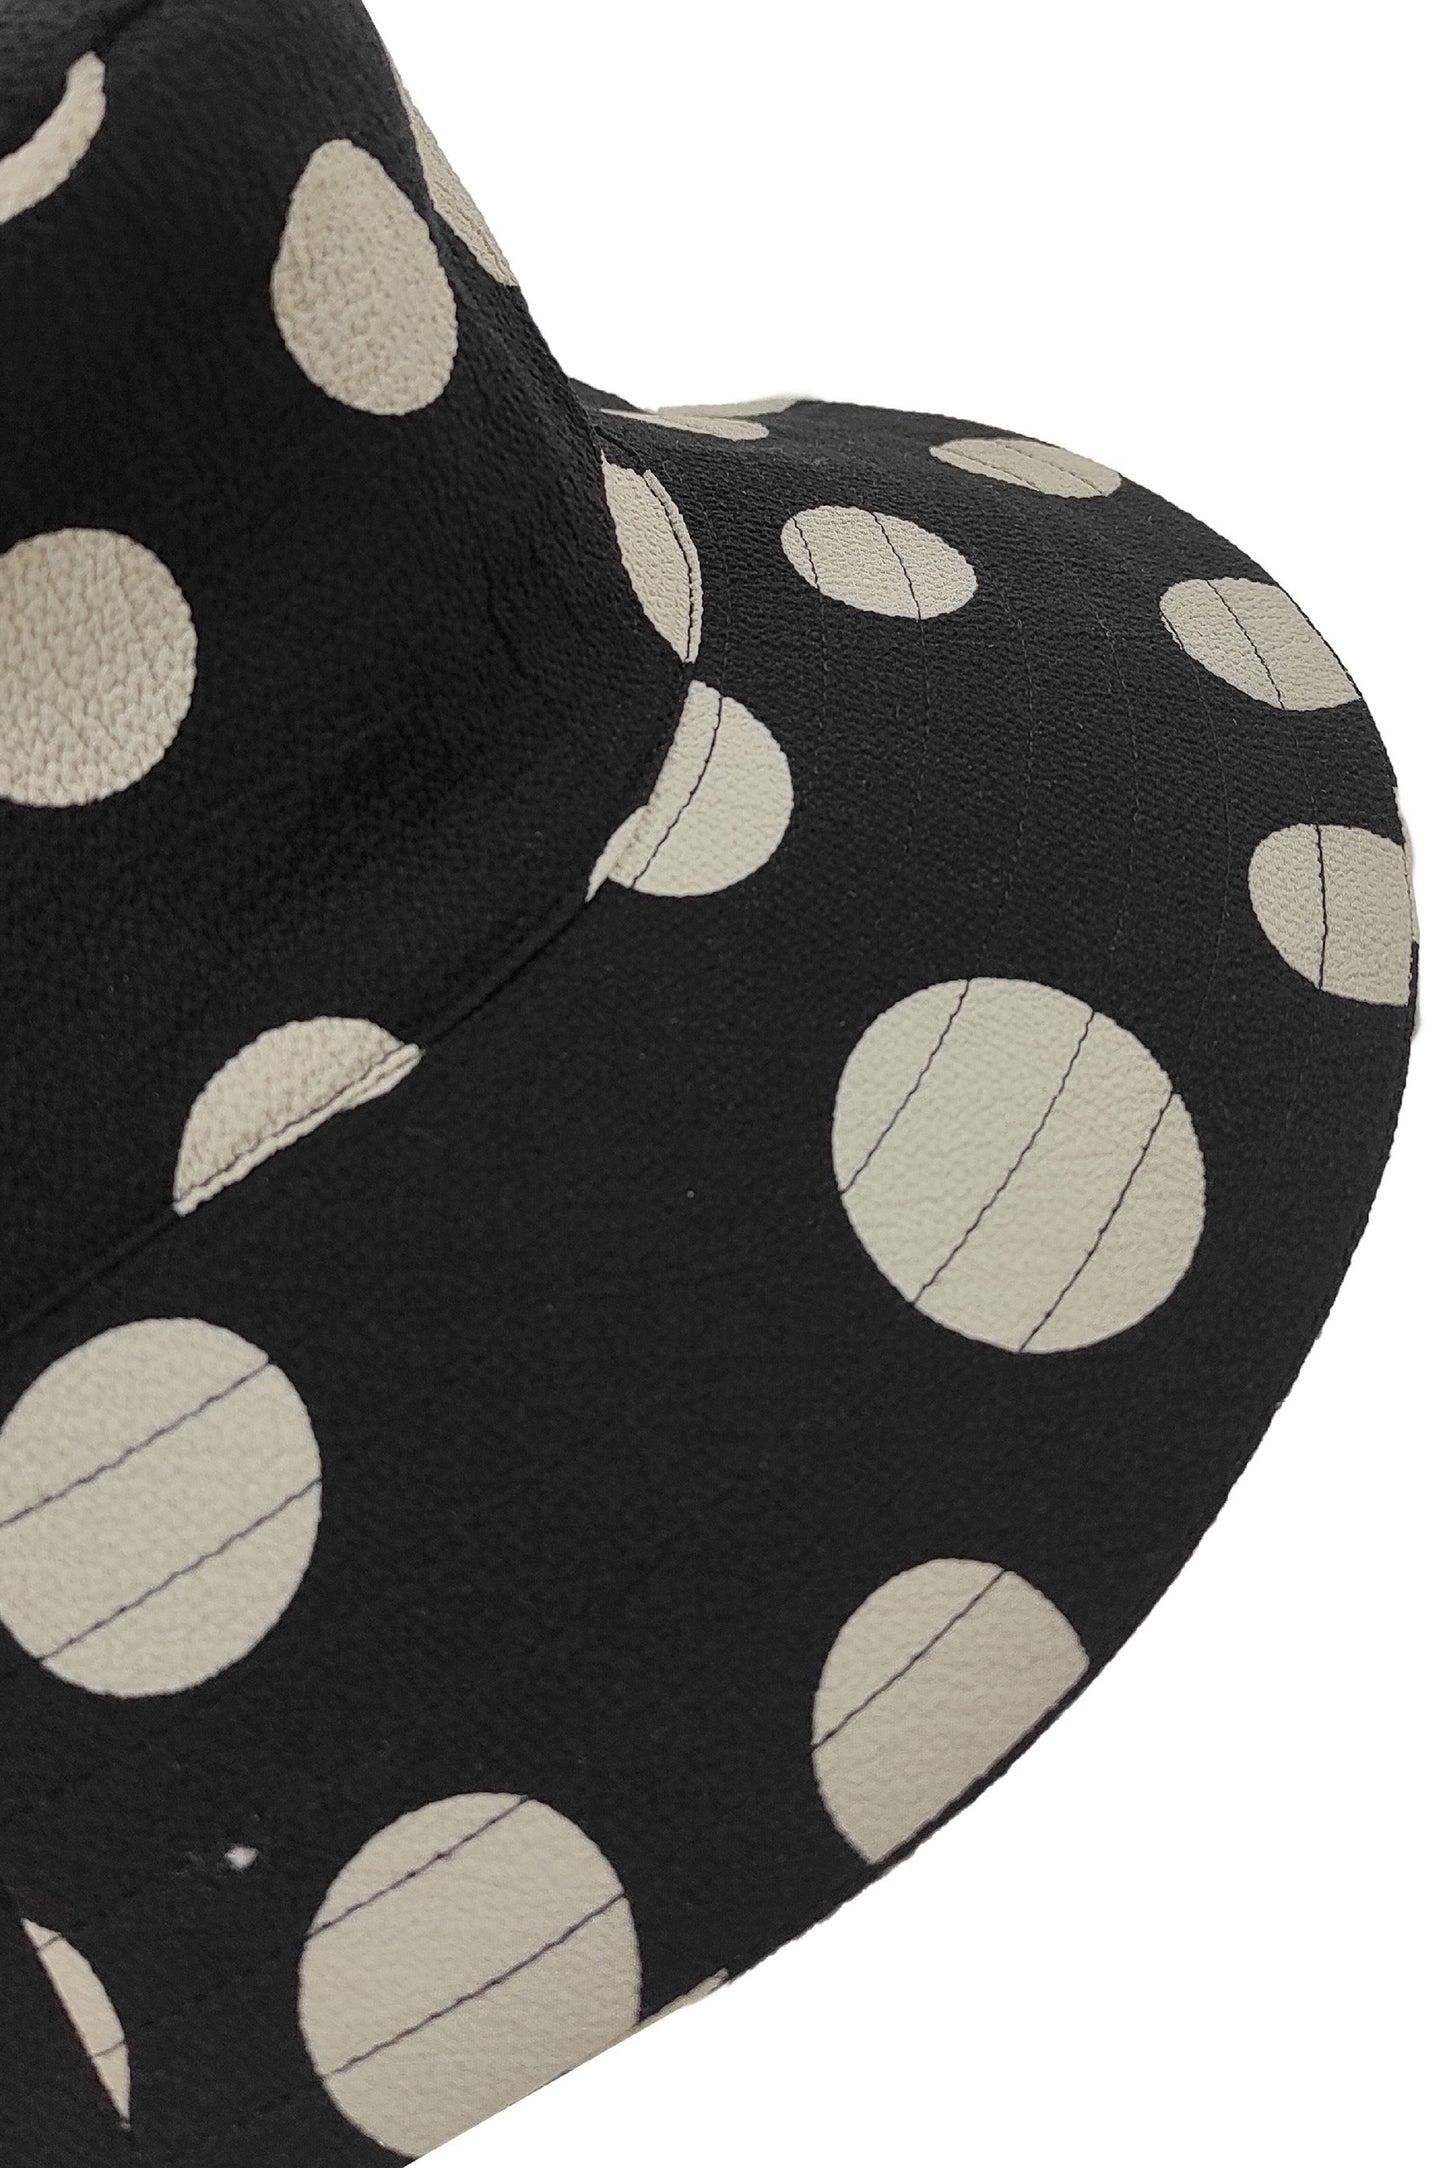 NUEVOSDAMAS Women Cotton Printed Hat Black/White